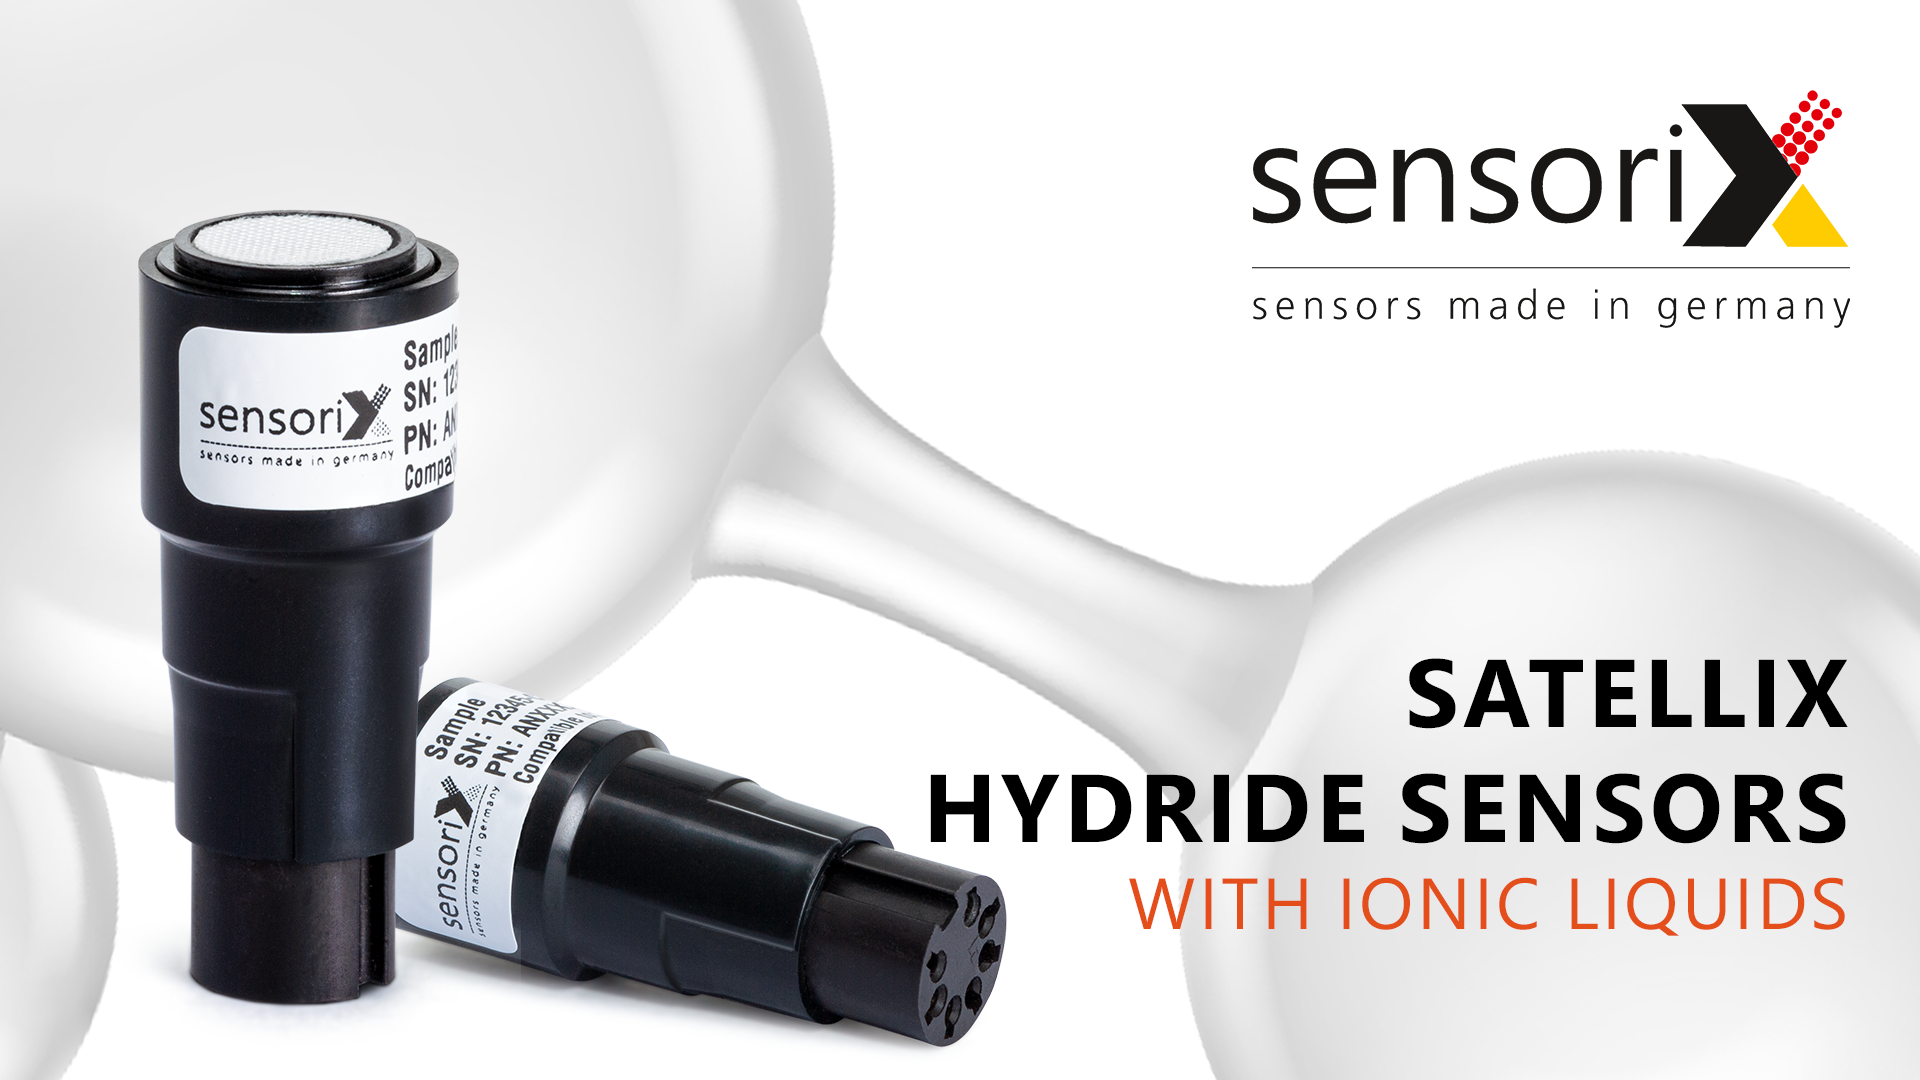 sensoris satellix hydride sensors with ionic liquids